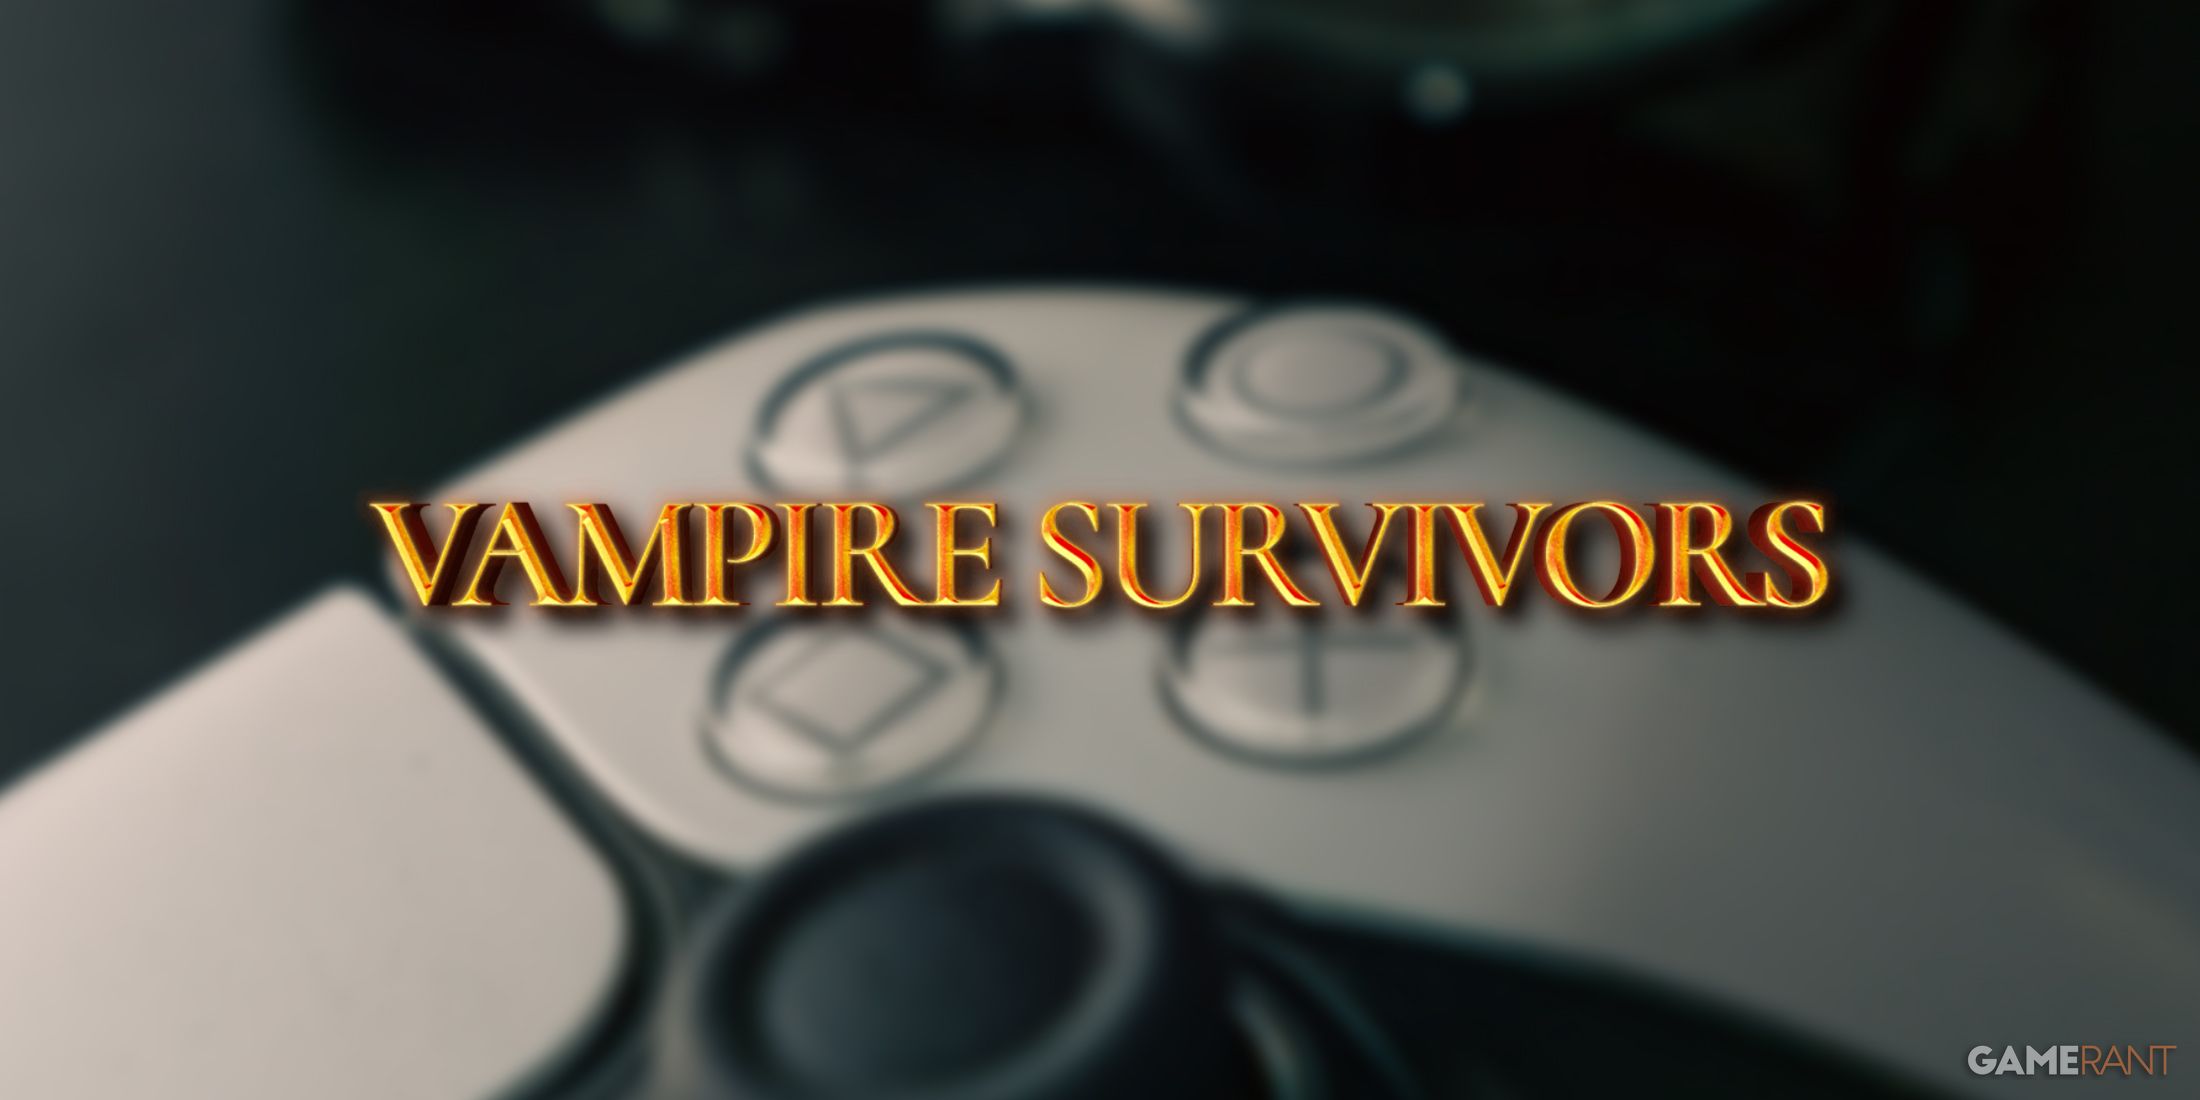 Vampire-Survivors-Featured-Image-1-1